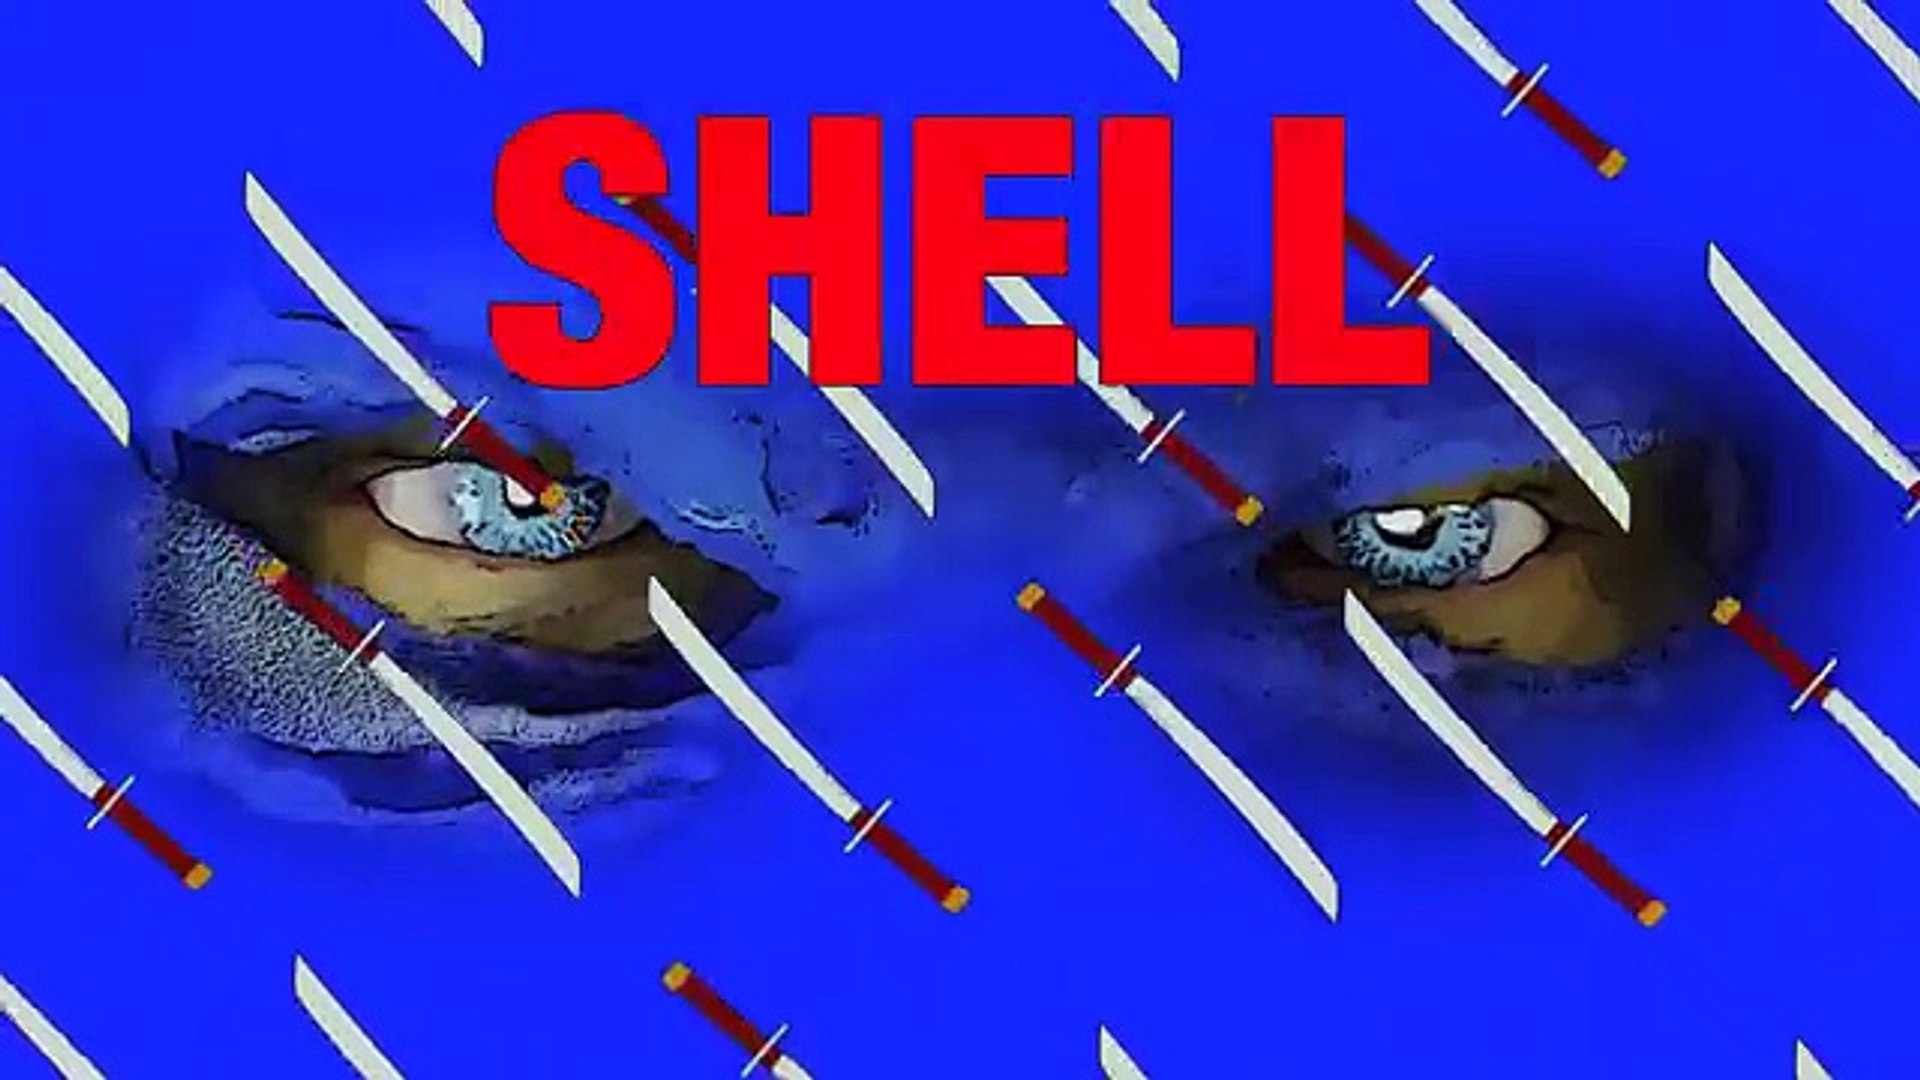 Juicy J, Wiz Khalifa, Ty Dolla $ign - Shell Shocked feat Kill The Noise &  Madsonik (Lyric Video) 